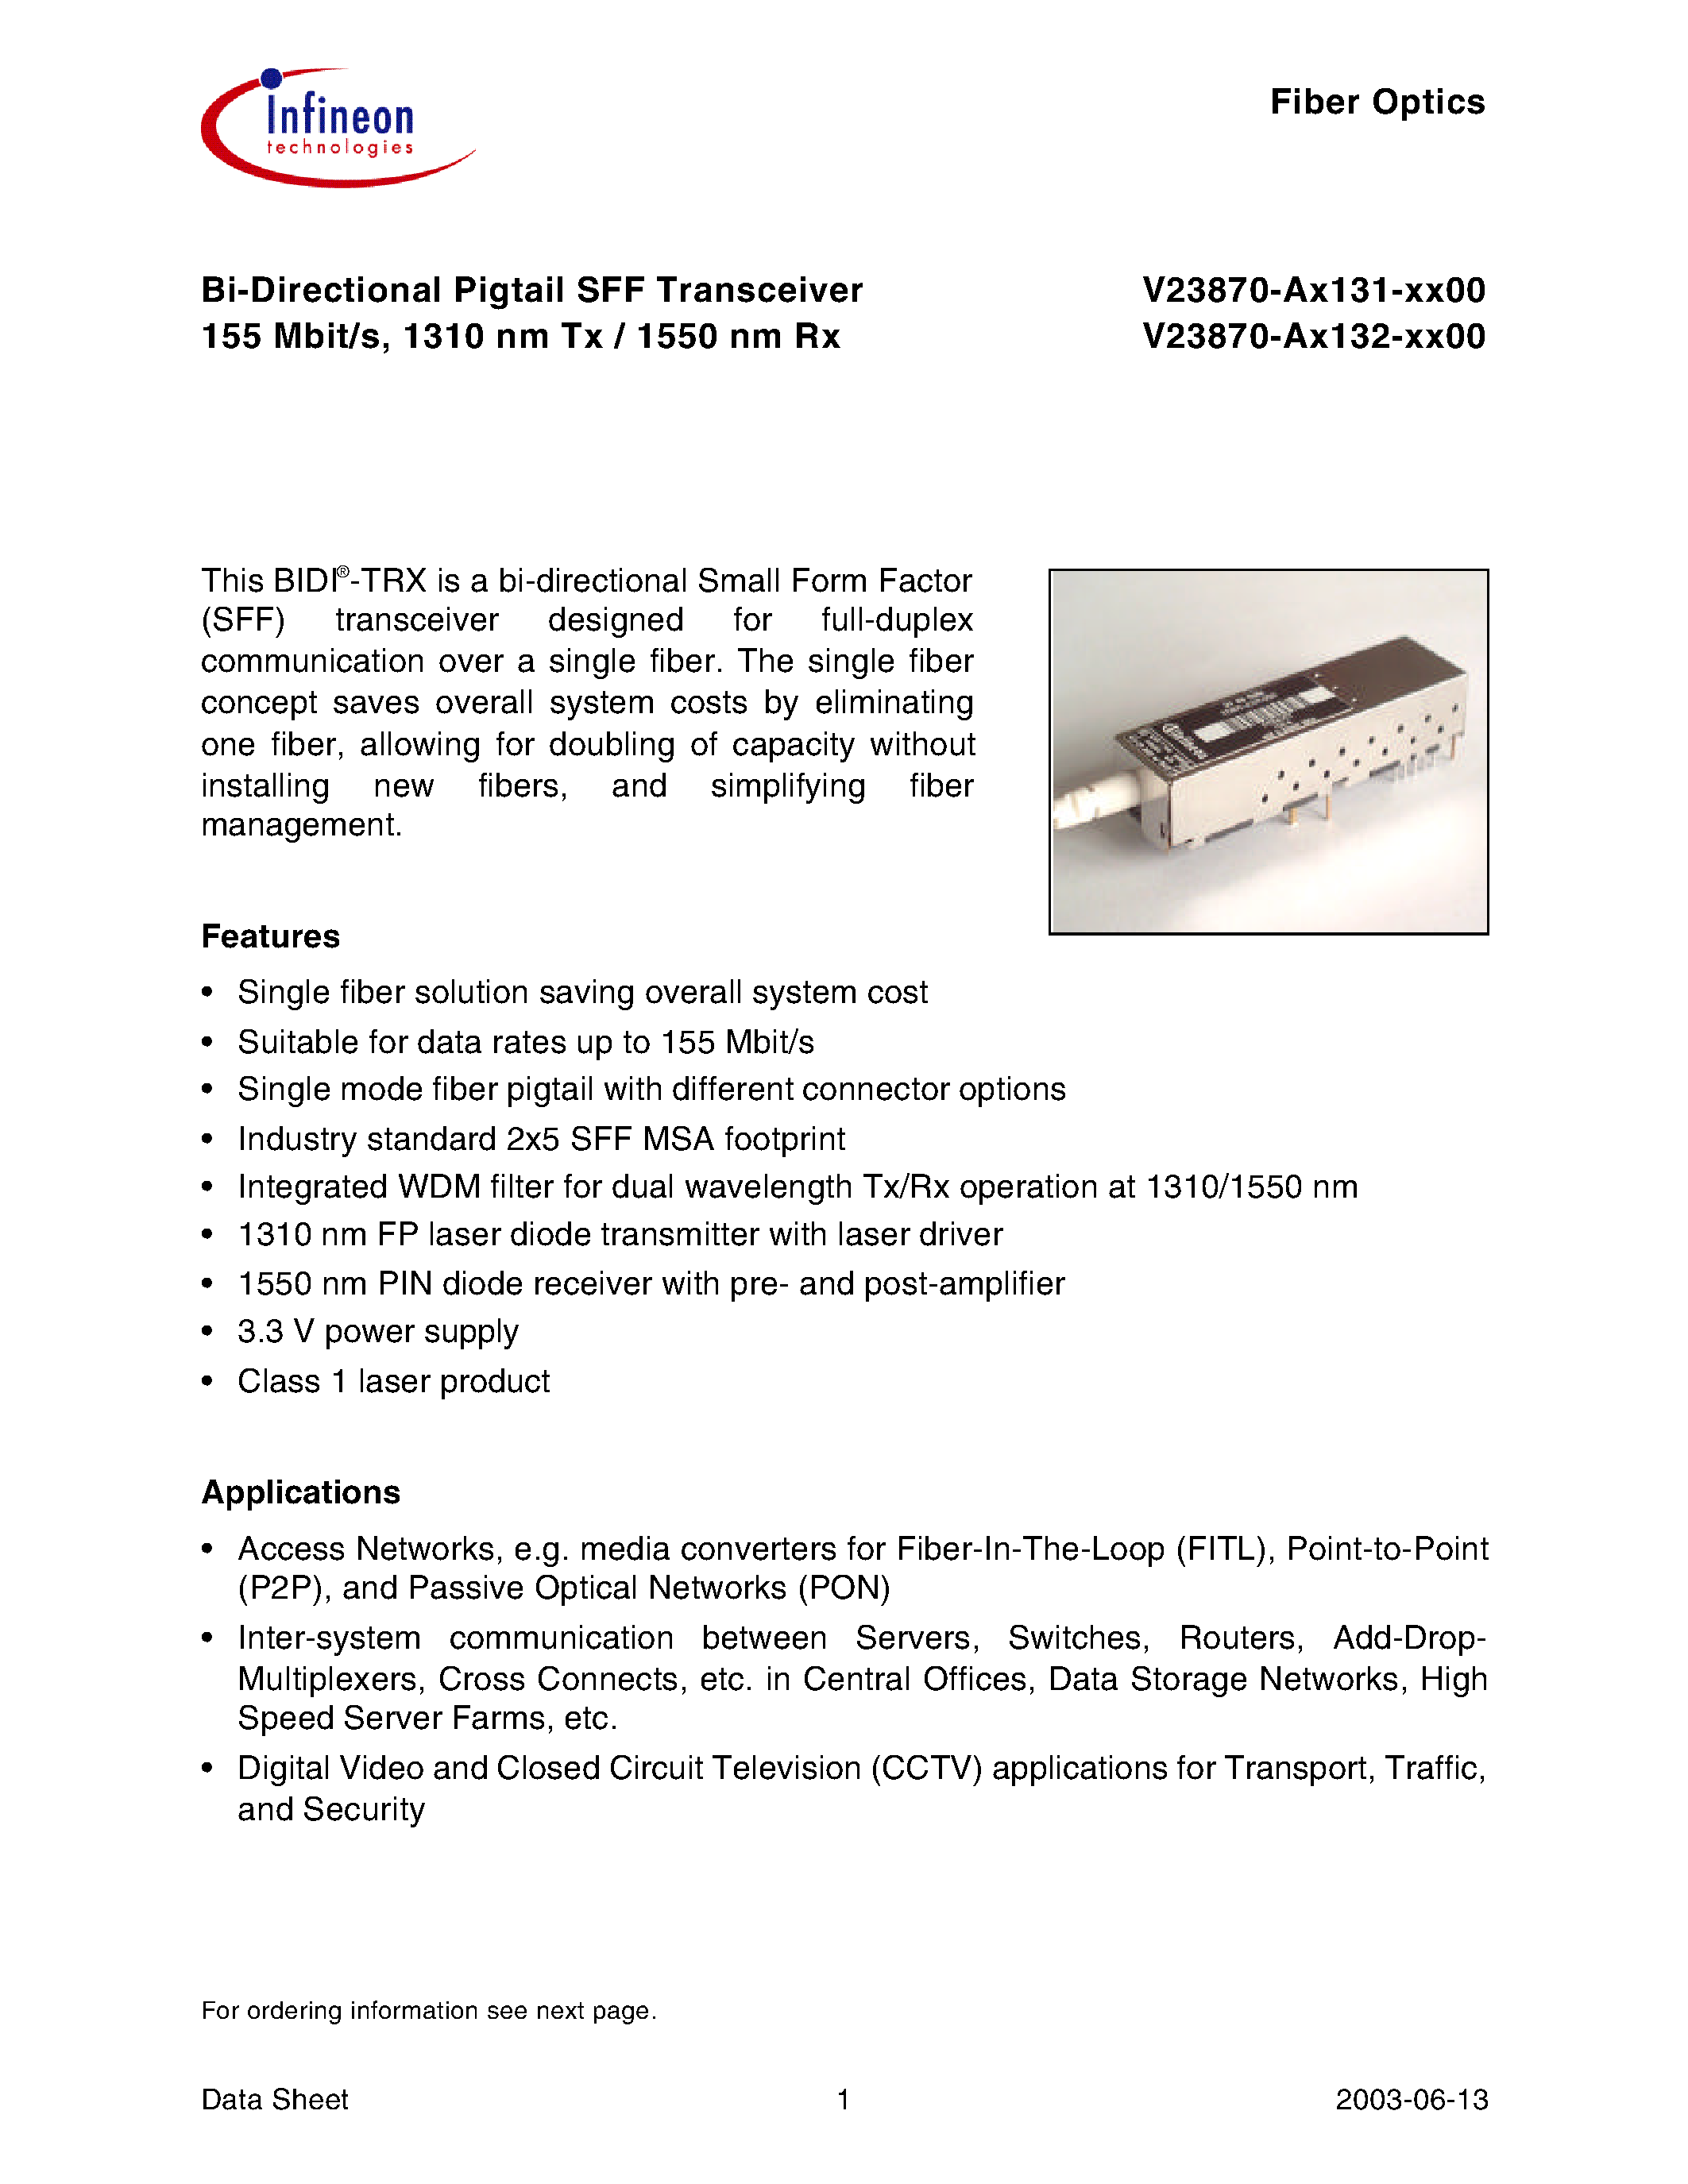 Даташит V23870-A3131-F200 - Bi-Directional Pigtail SFF Transceiver 155 Mbit/s/ 1310 nm Tx / 1550 nm Rx страница 1